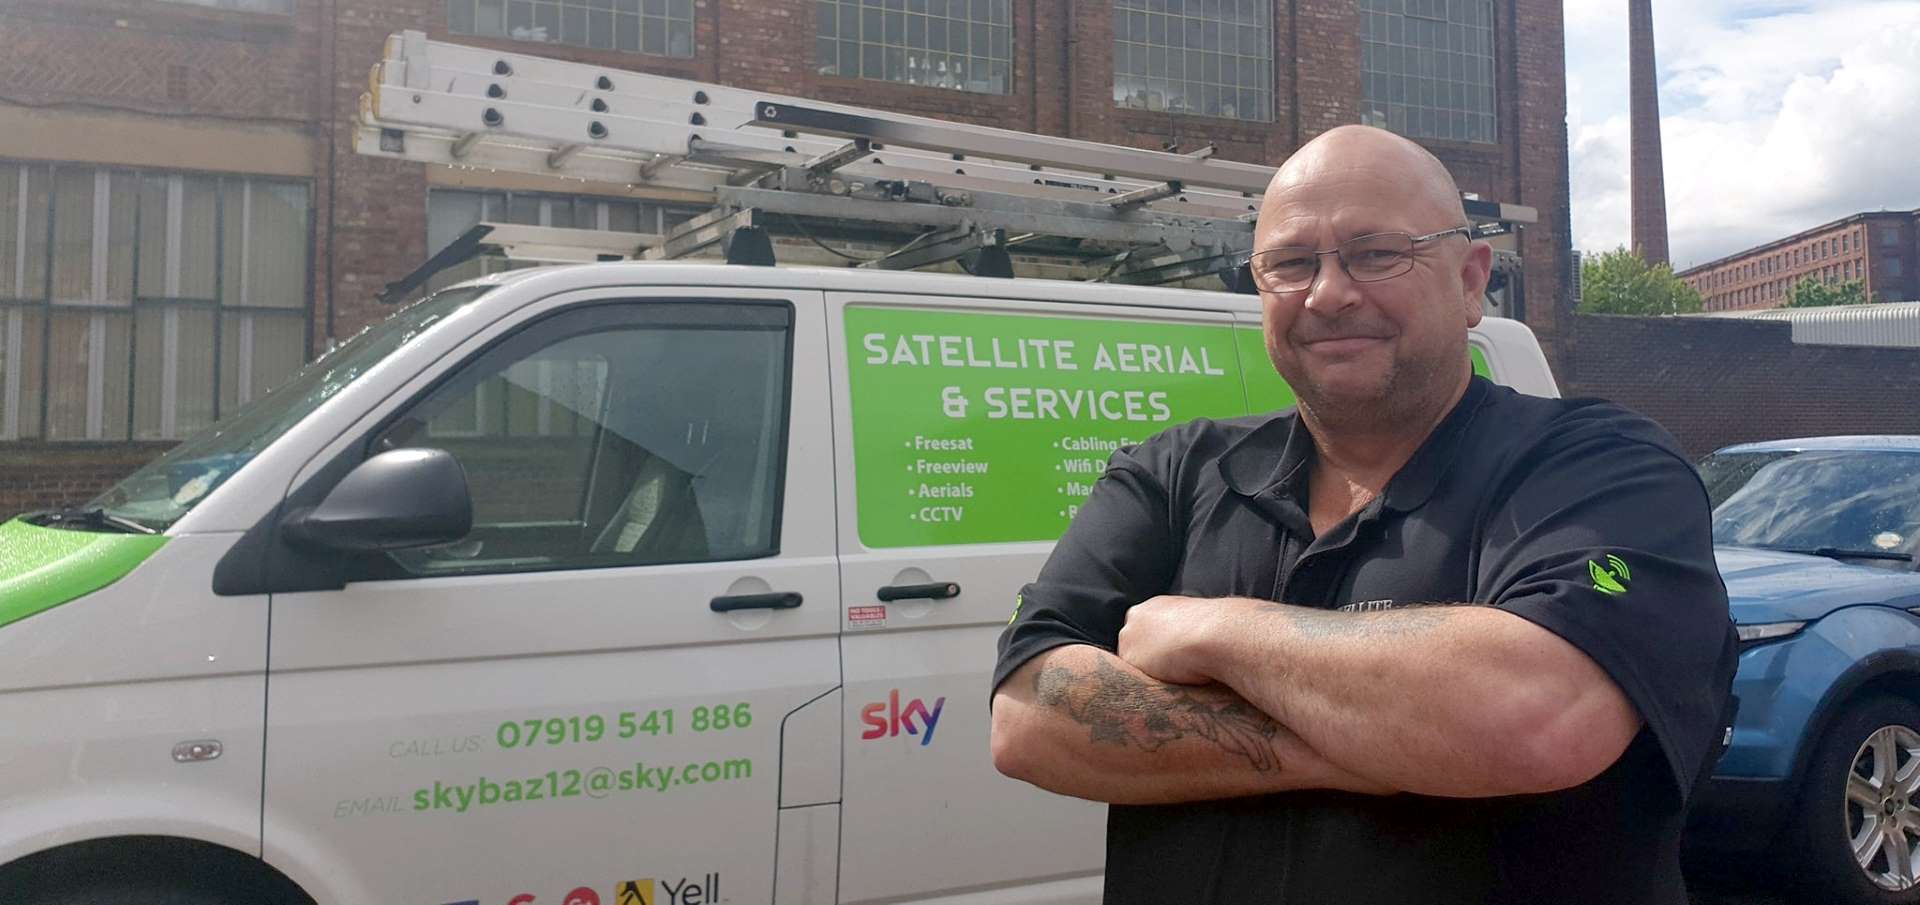 Satellite, Aerial and Services in Carlisle, Cumbria and Scotland